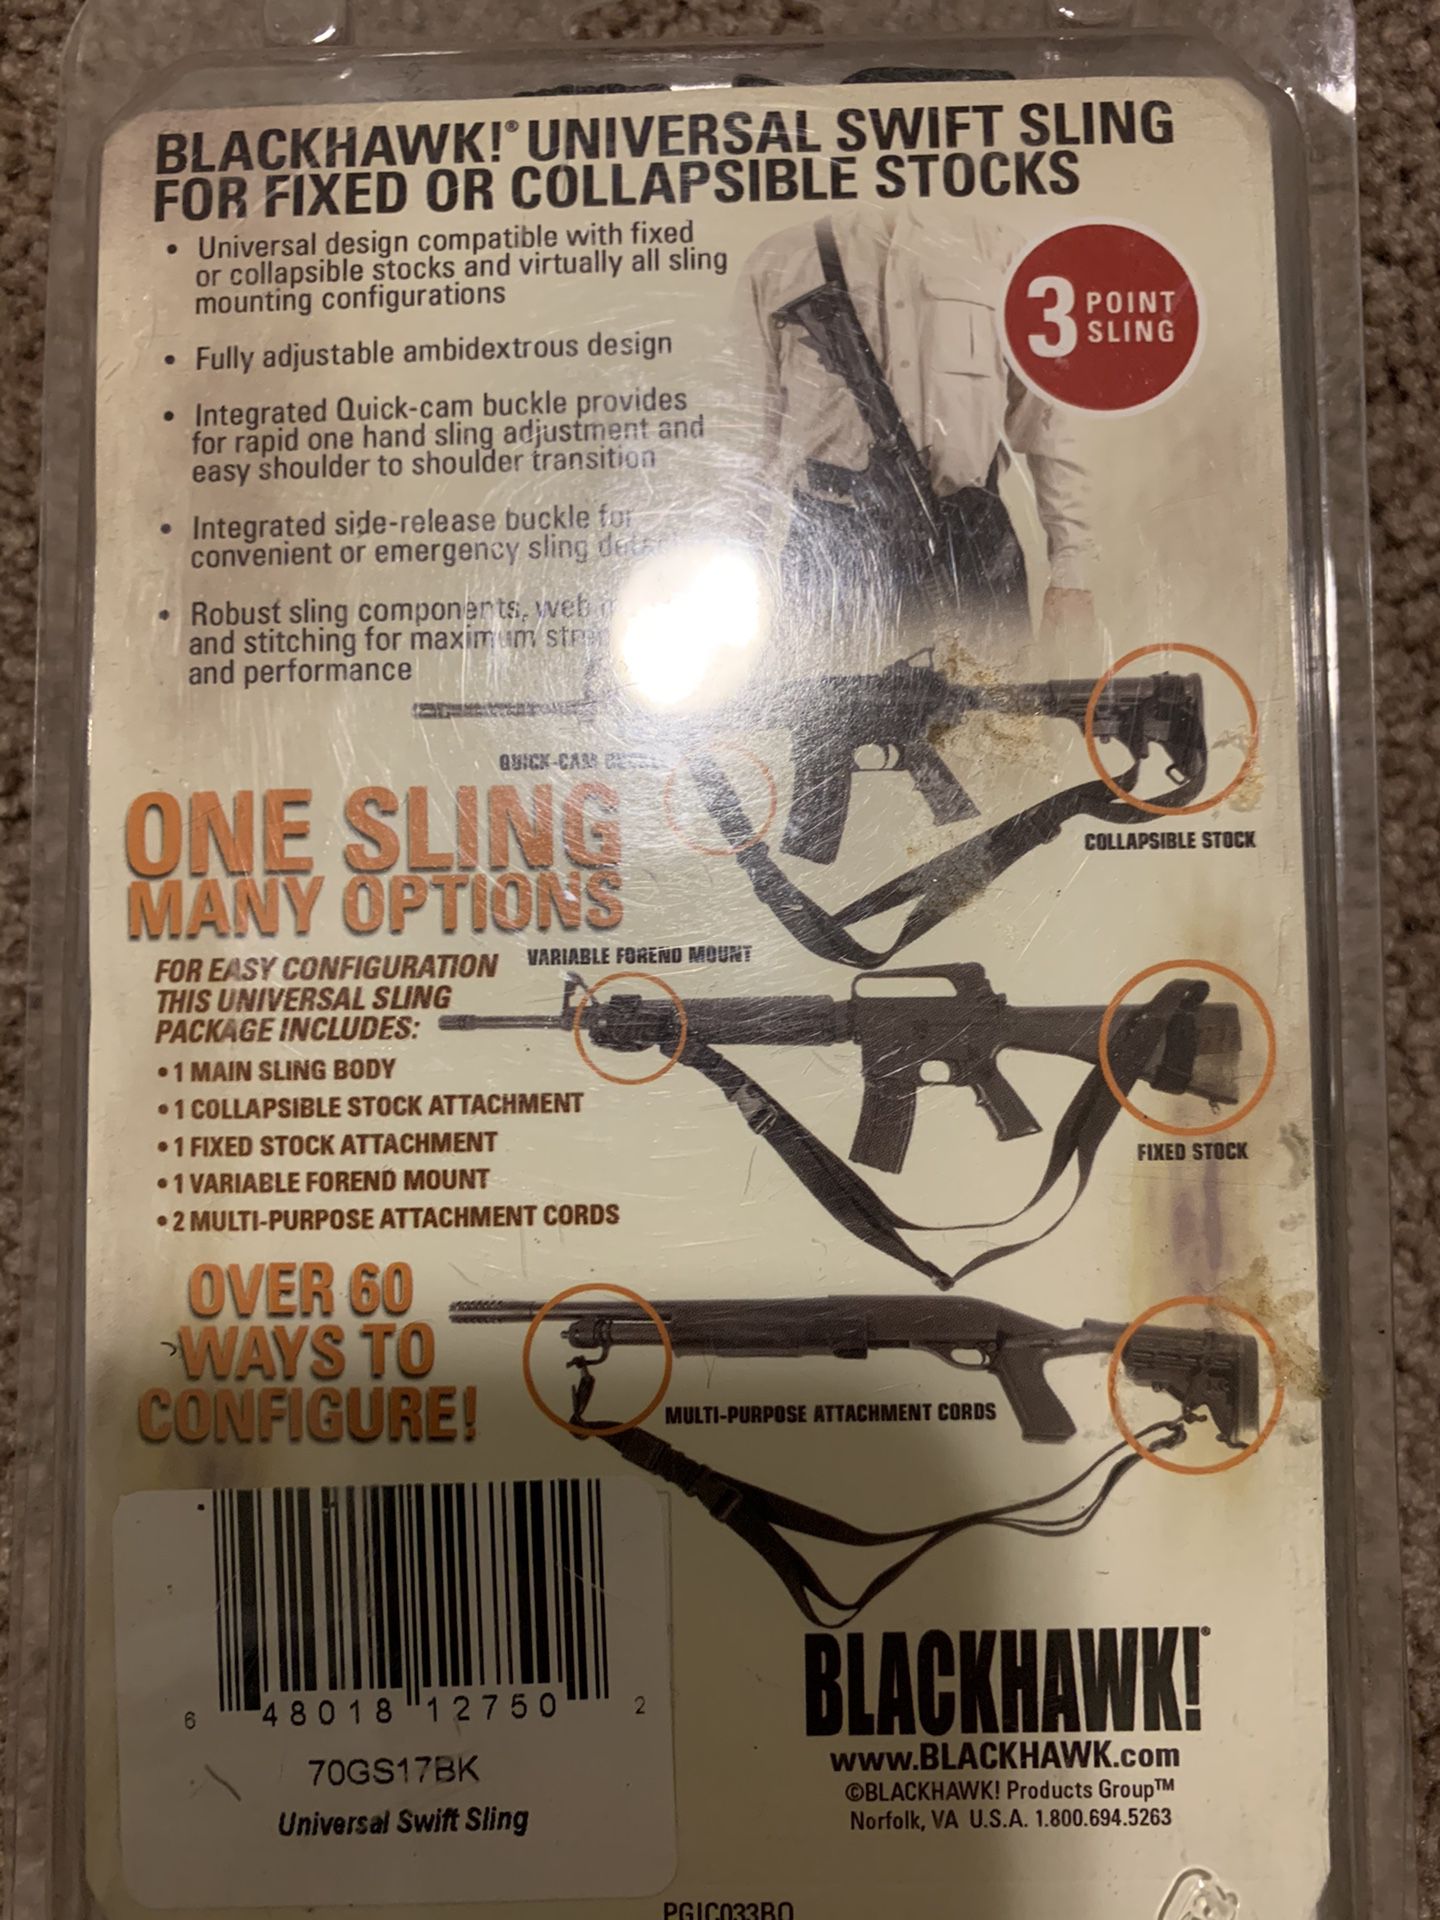 Blackhawk universal Swift sling